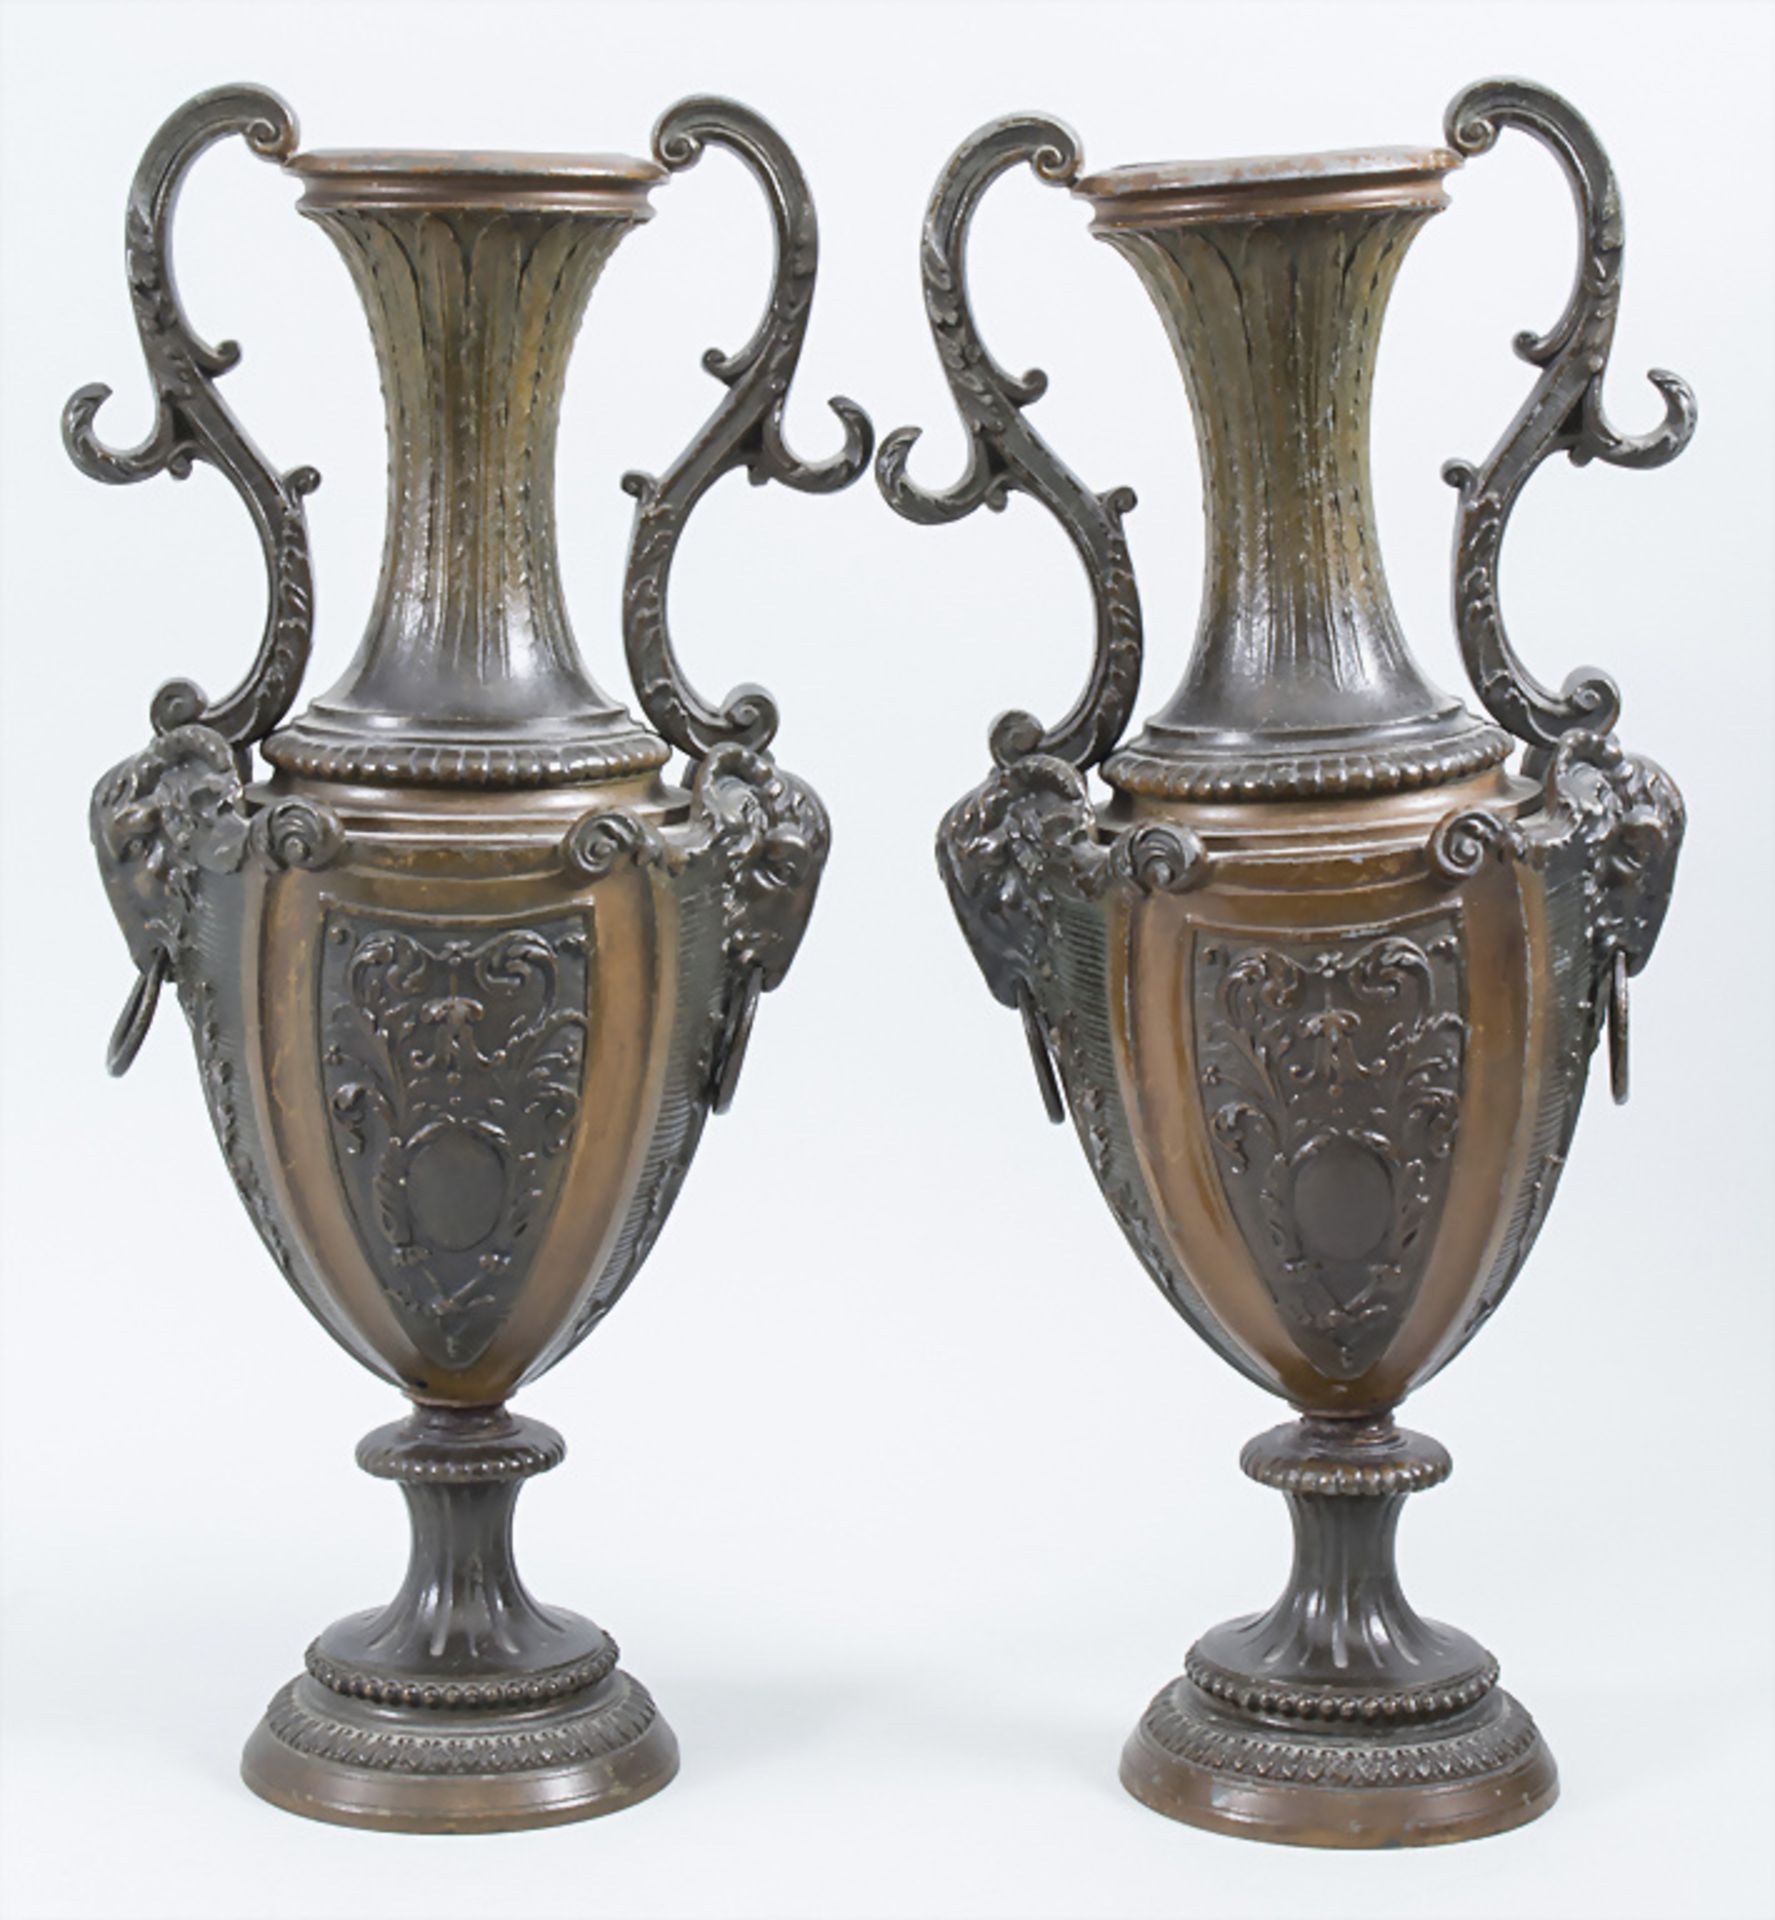 Zwei Historismus Vasen / Two Historicism vases, Paris, um 1900